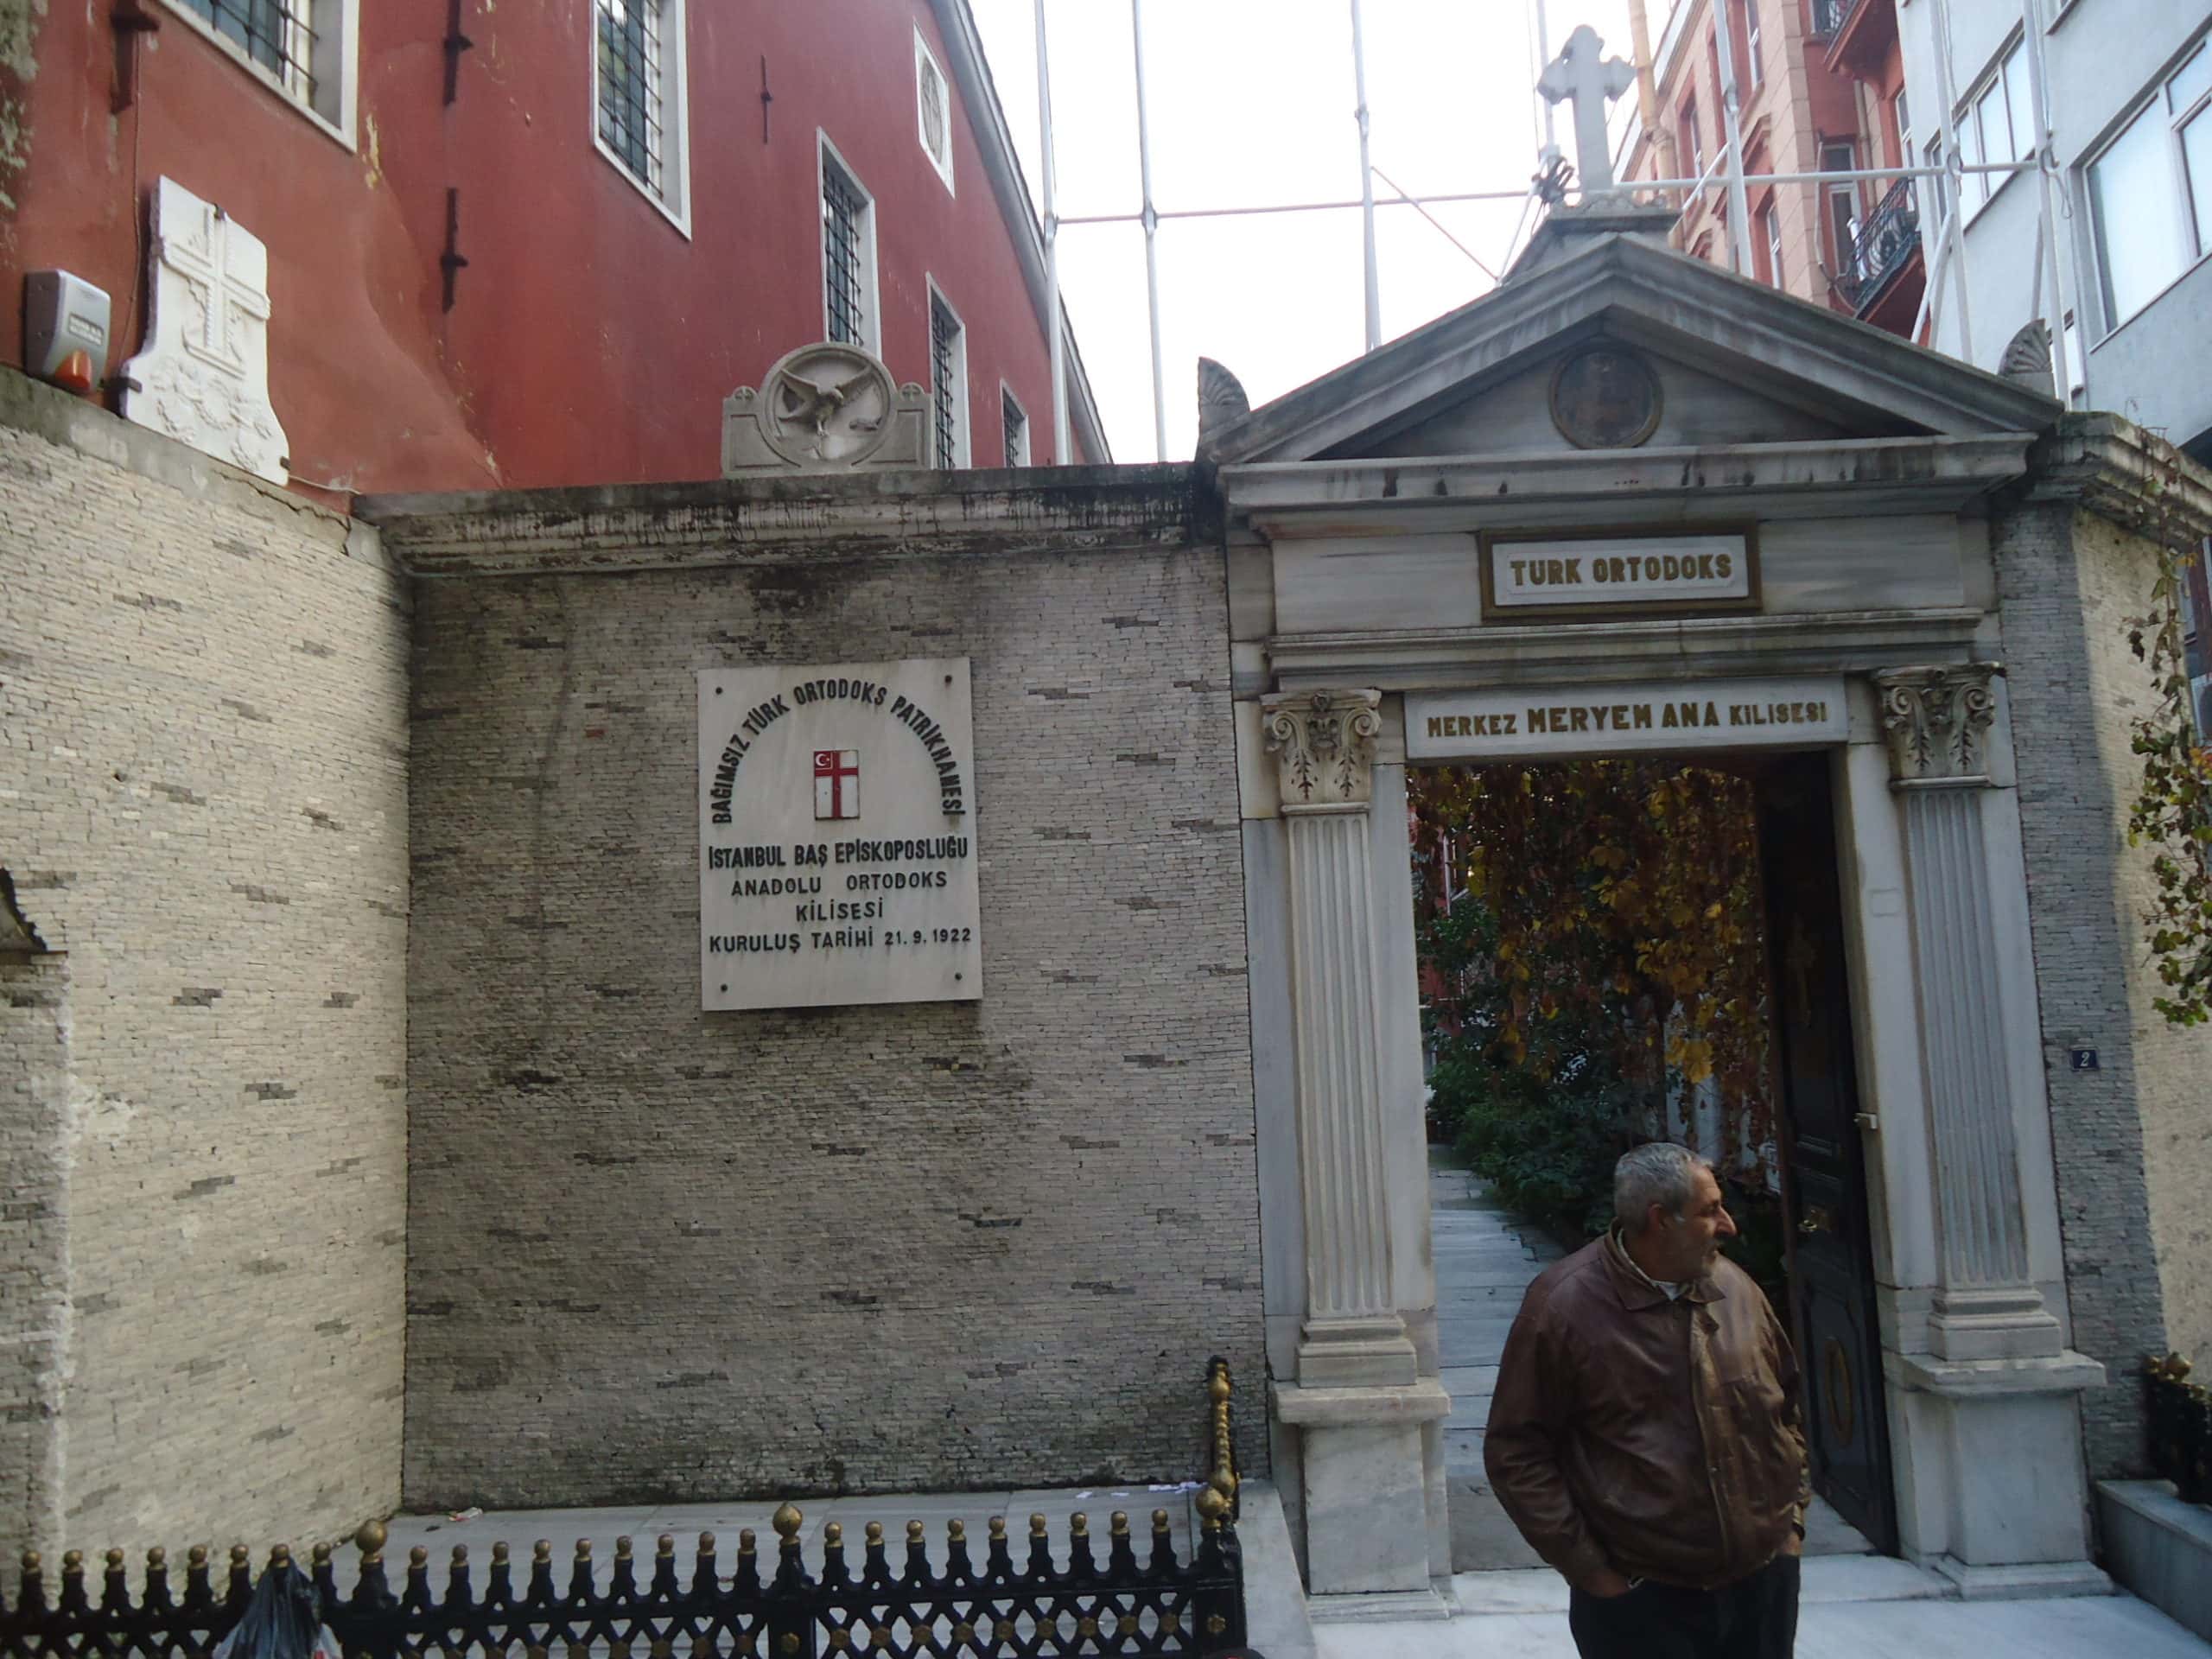 Entrance to the Meryem Ana Turkish Orthodox Church